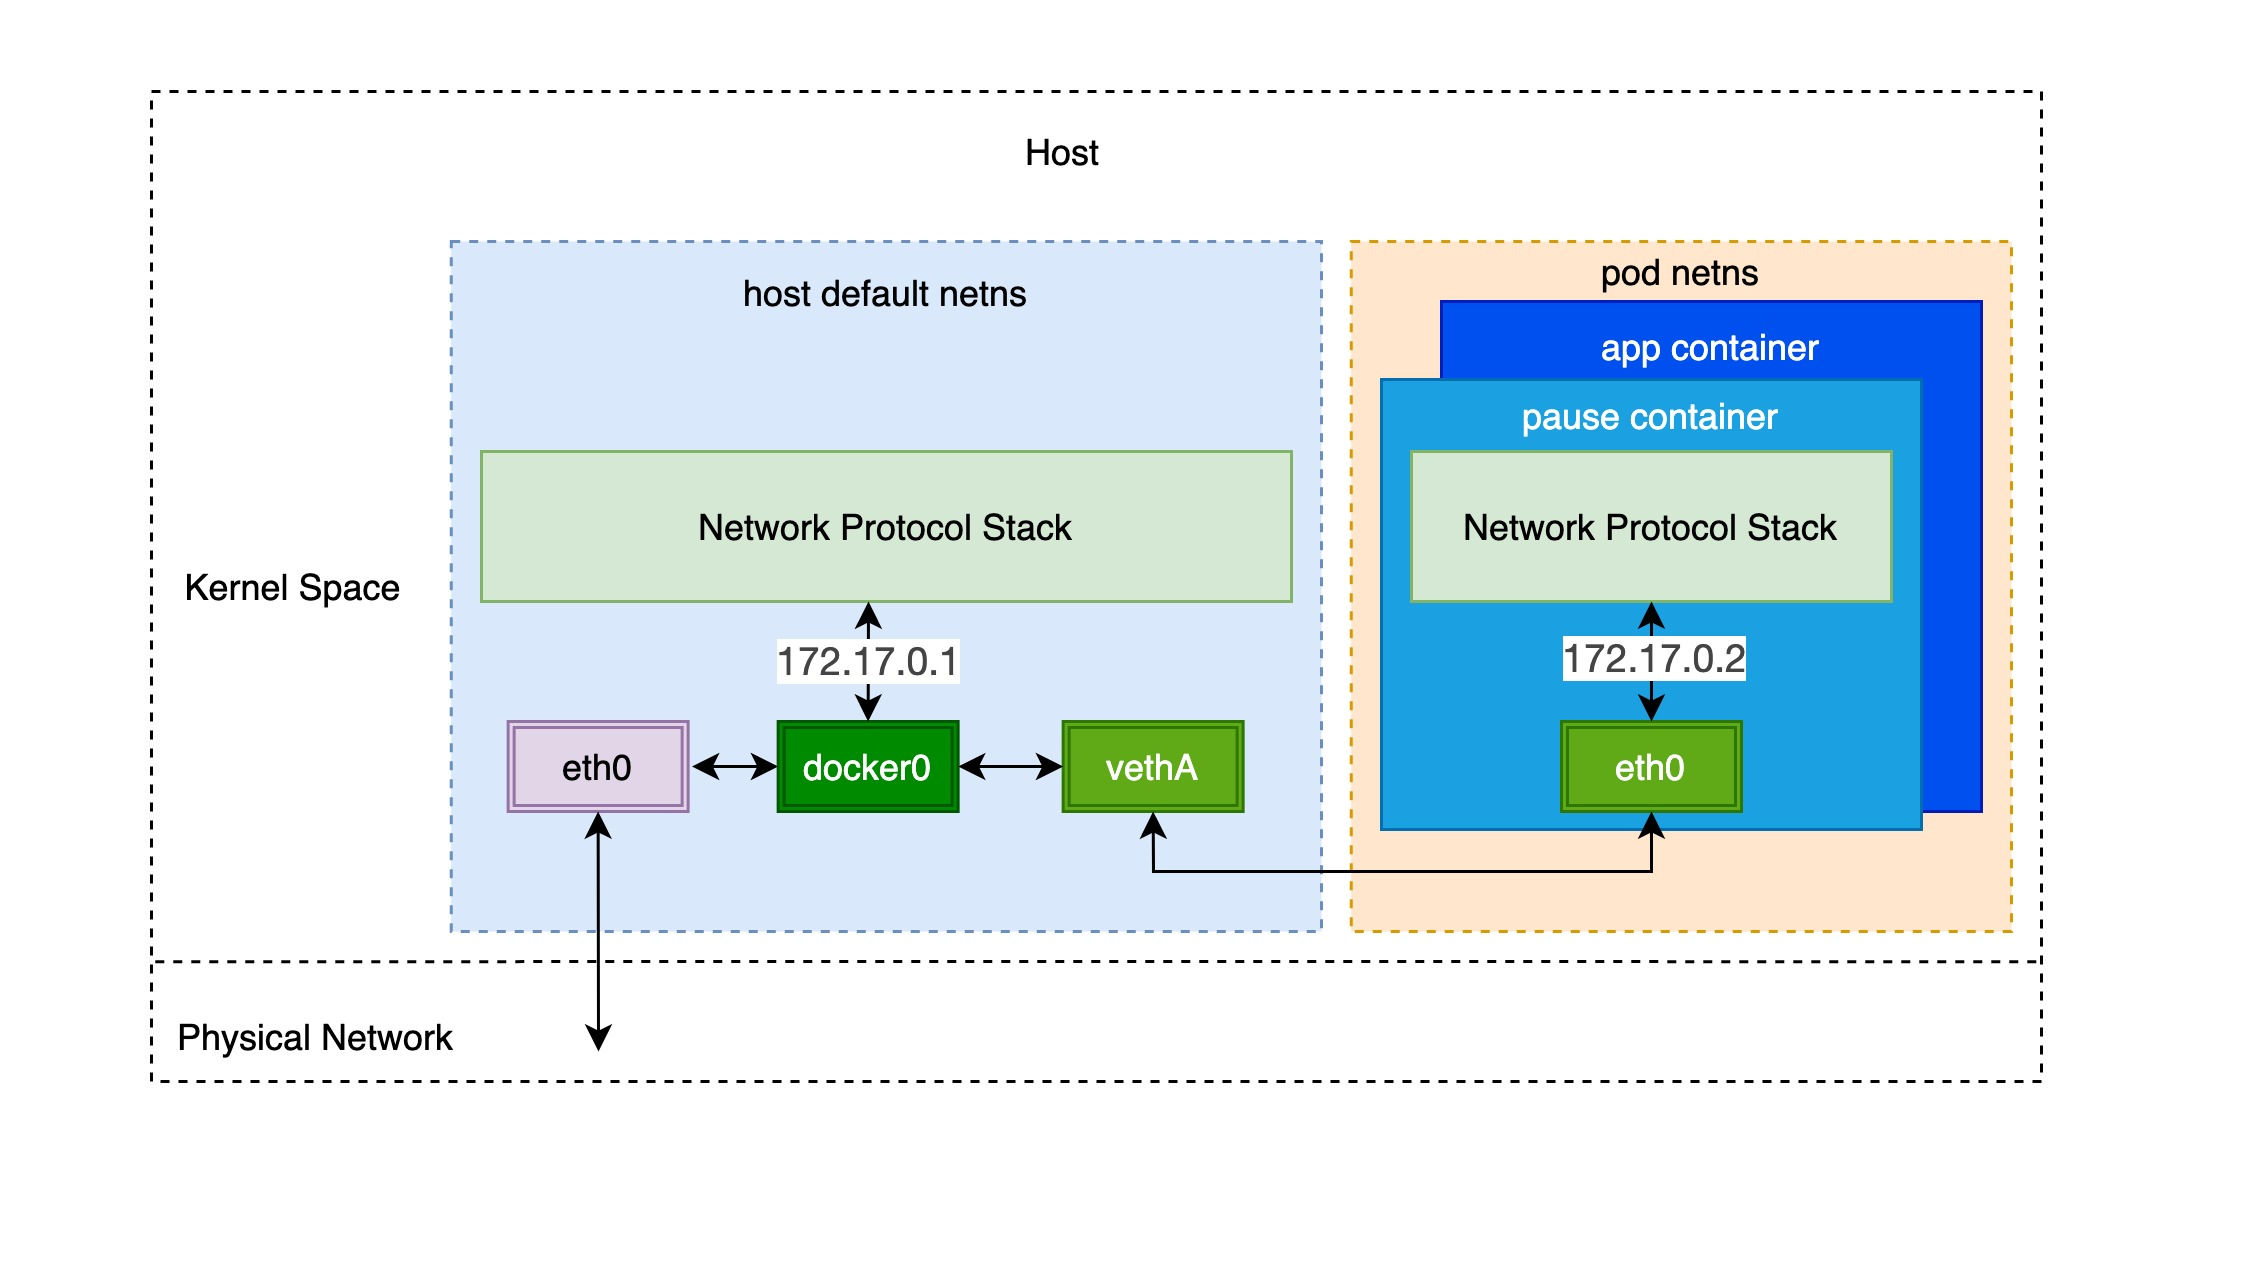 Single pod network model